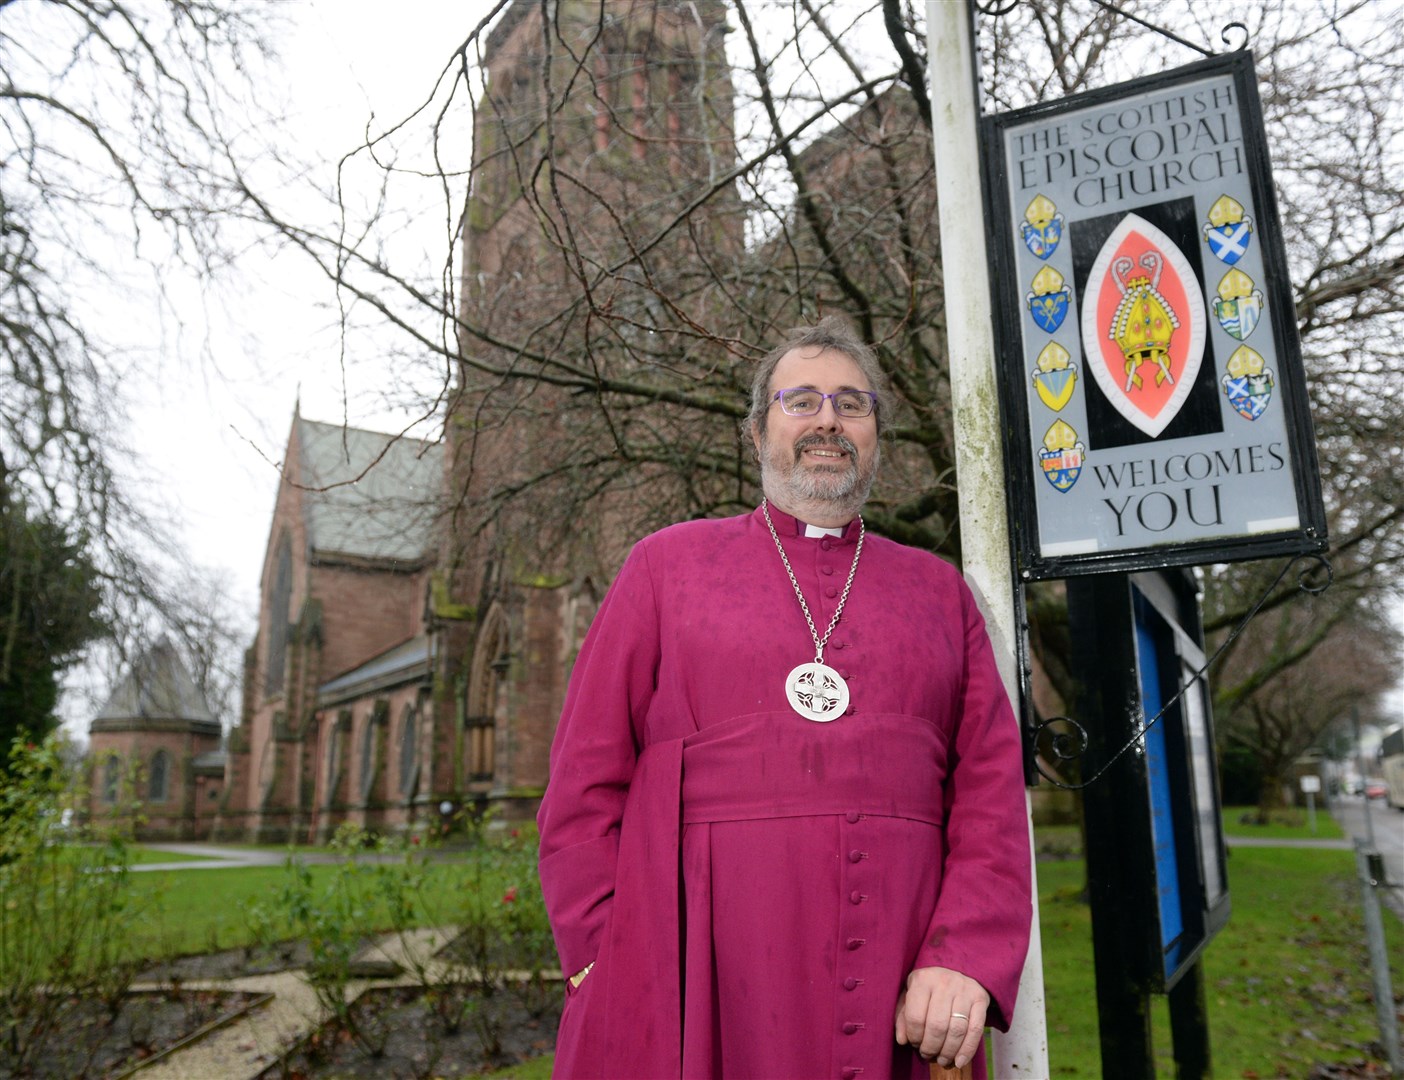 Bishop Mark Strange has backed the initiative.